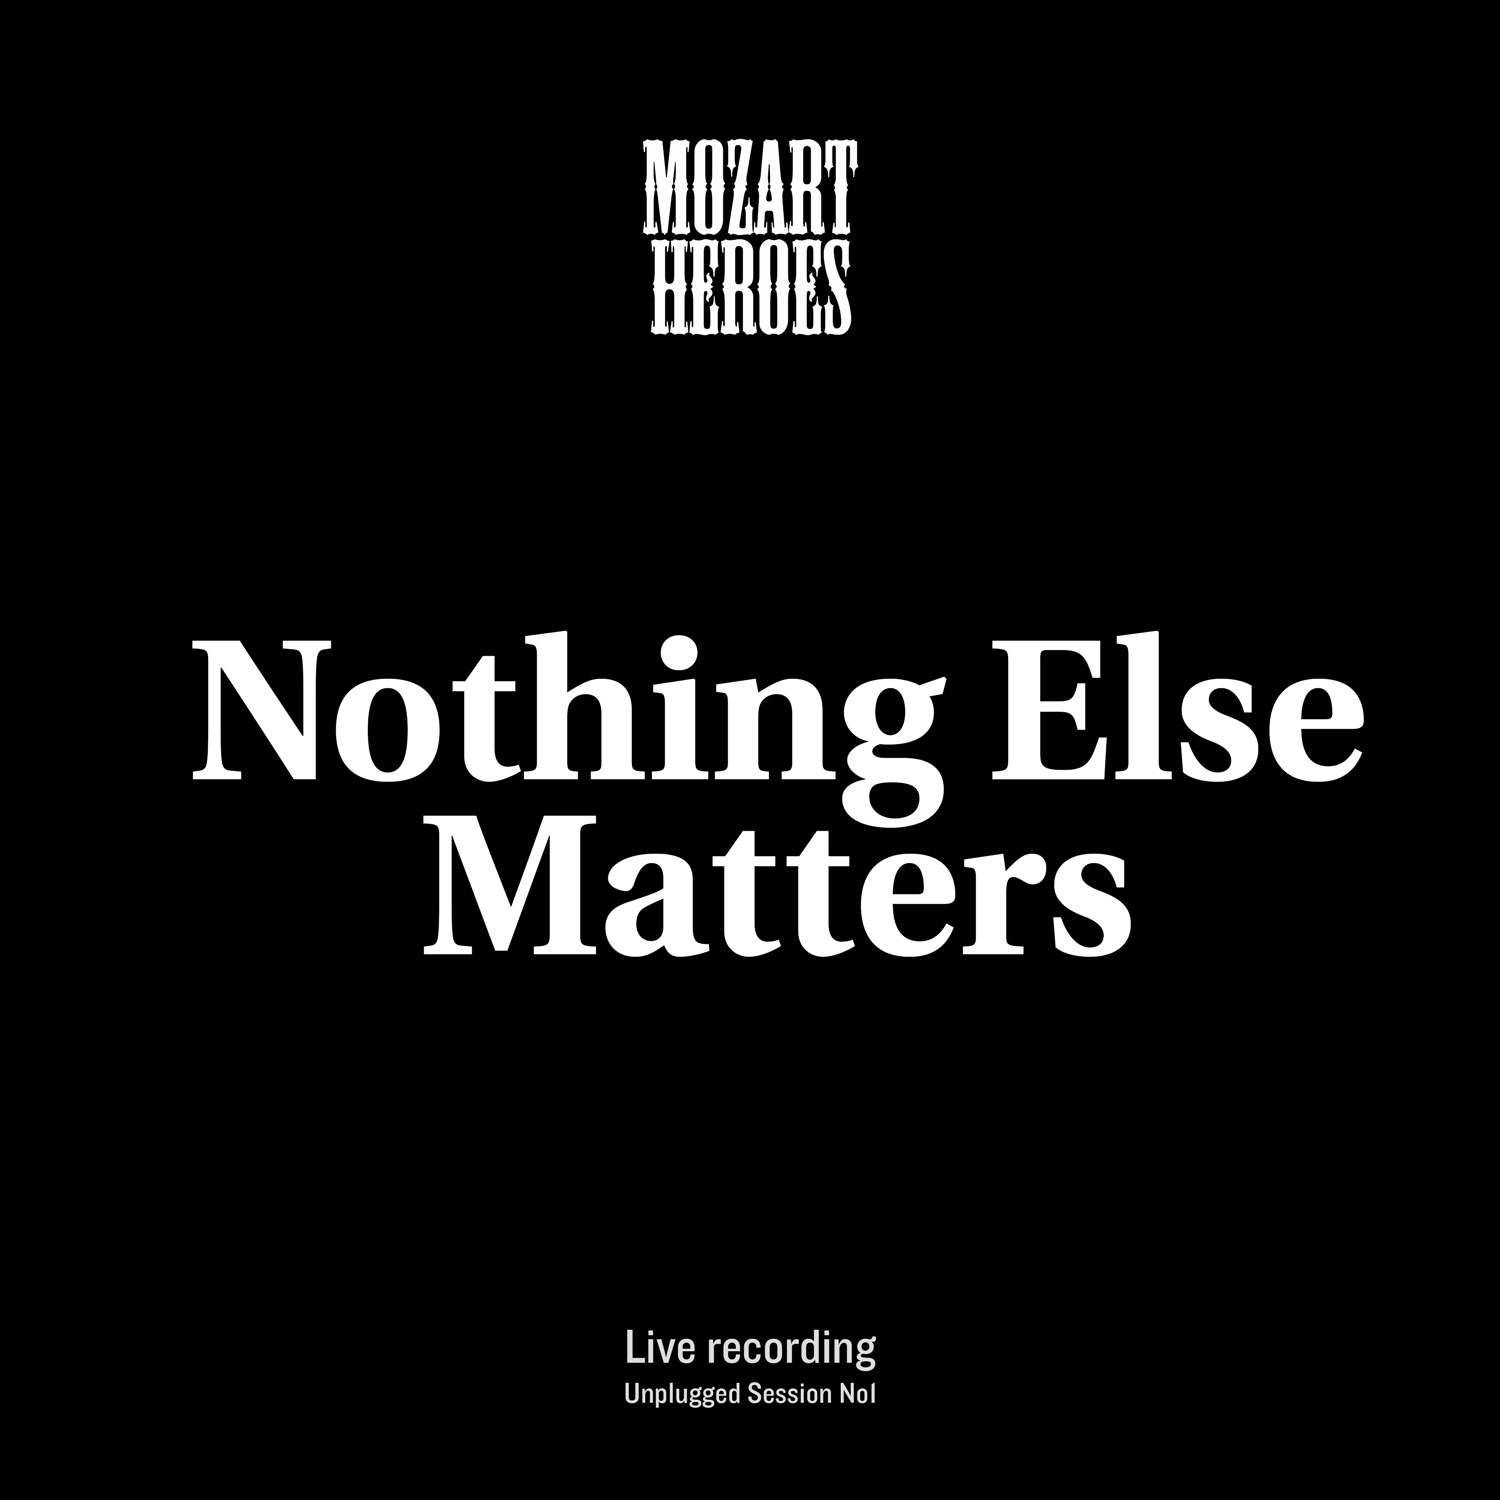 Else matters перевод на русский. Nothing else matters. Metallica nothing else matters. Nothing else matters обложка. Nothing Ear.